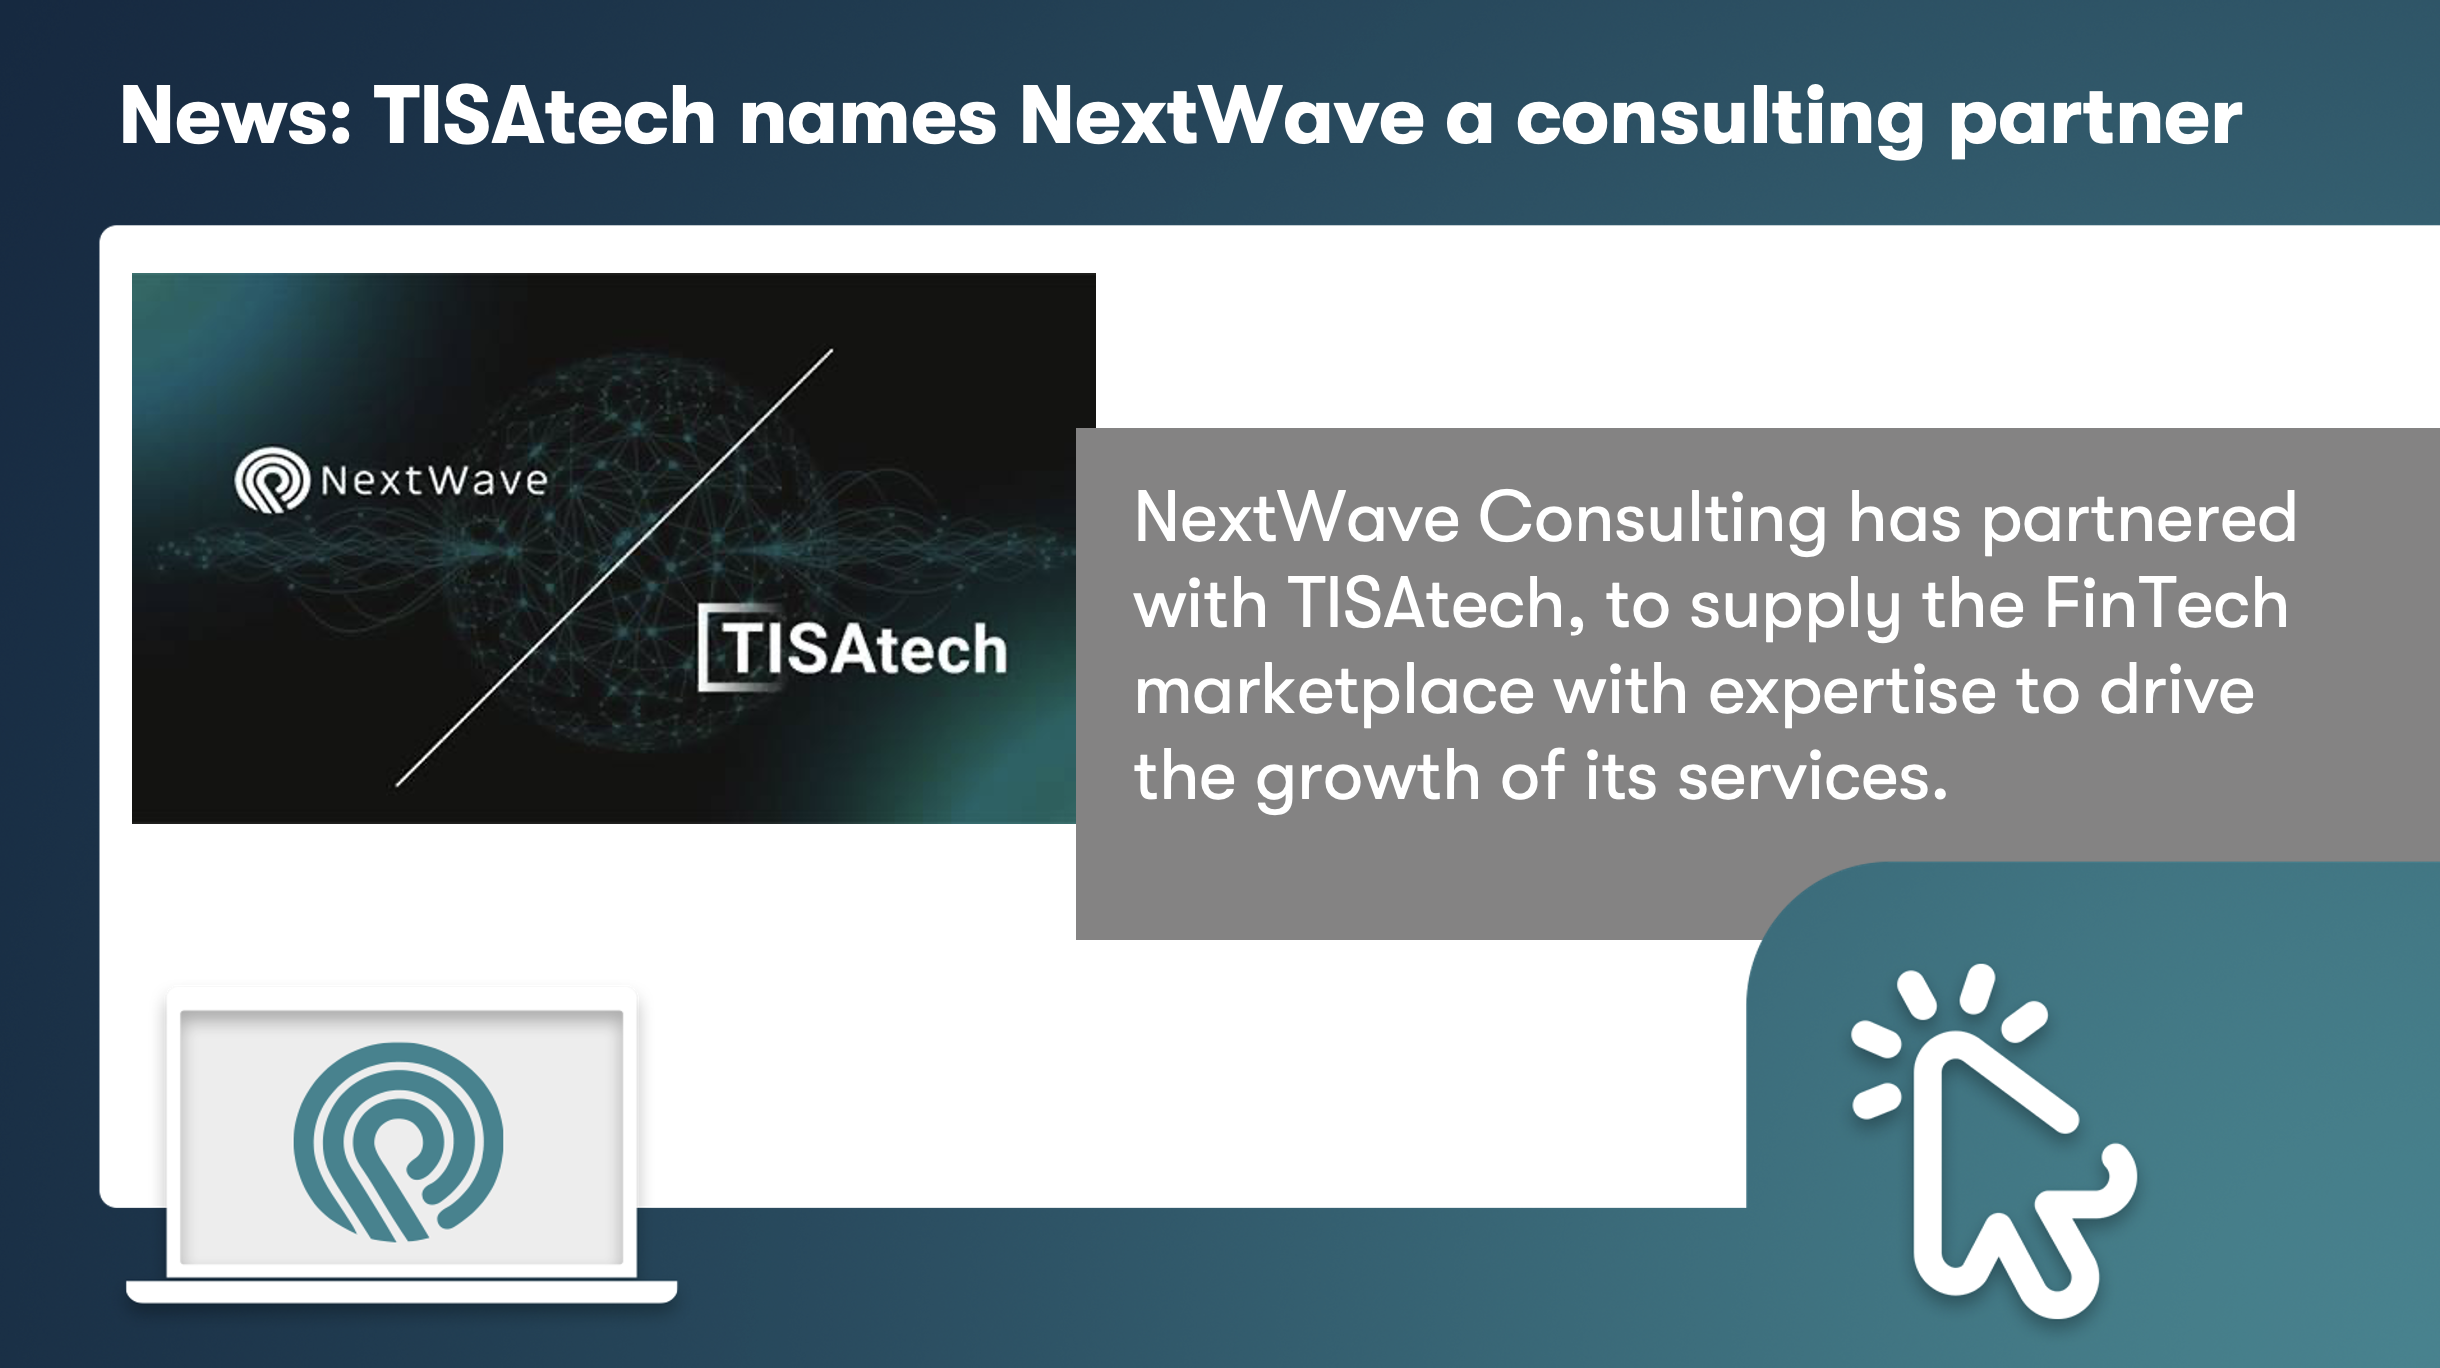 News: TISAtech names NextWave a consulting partner